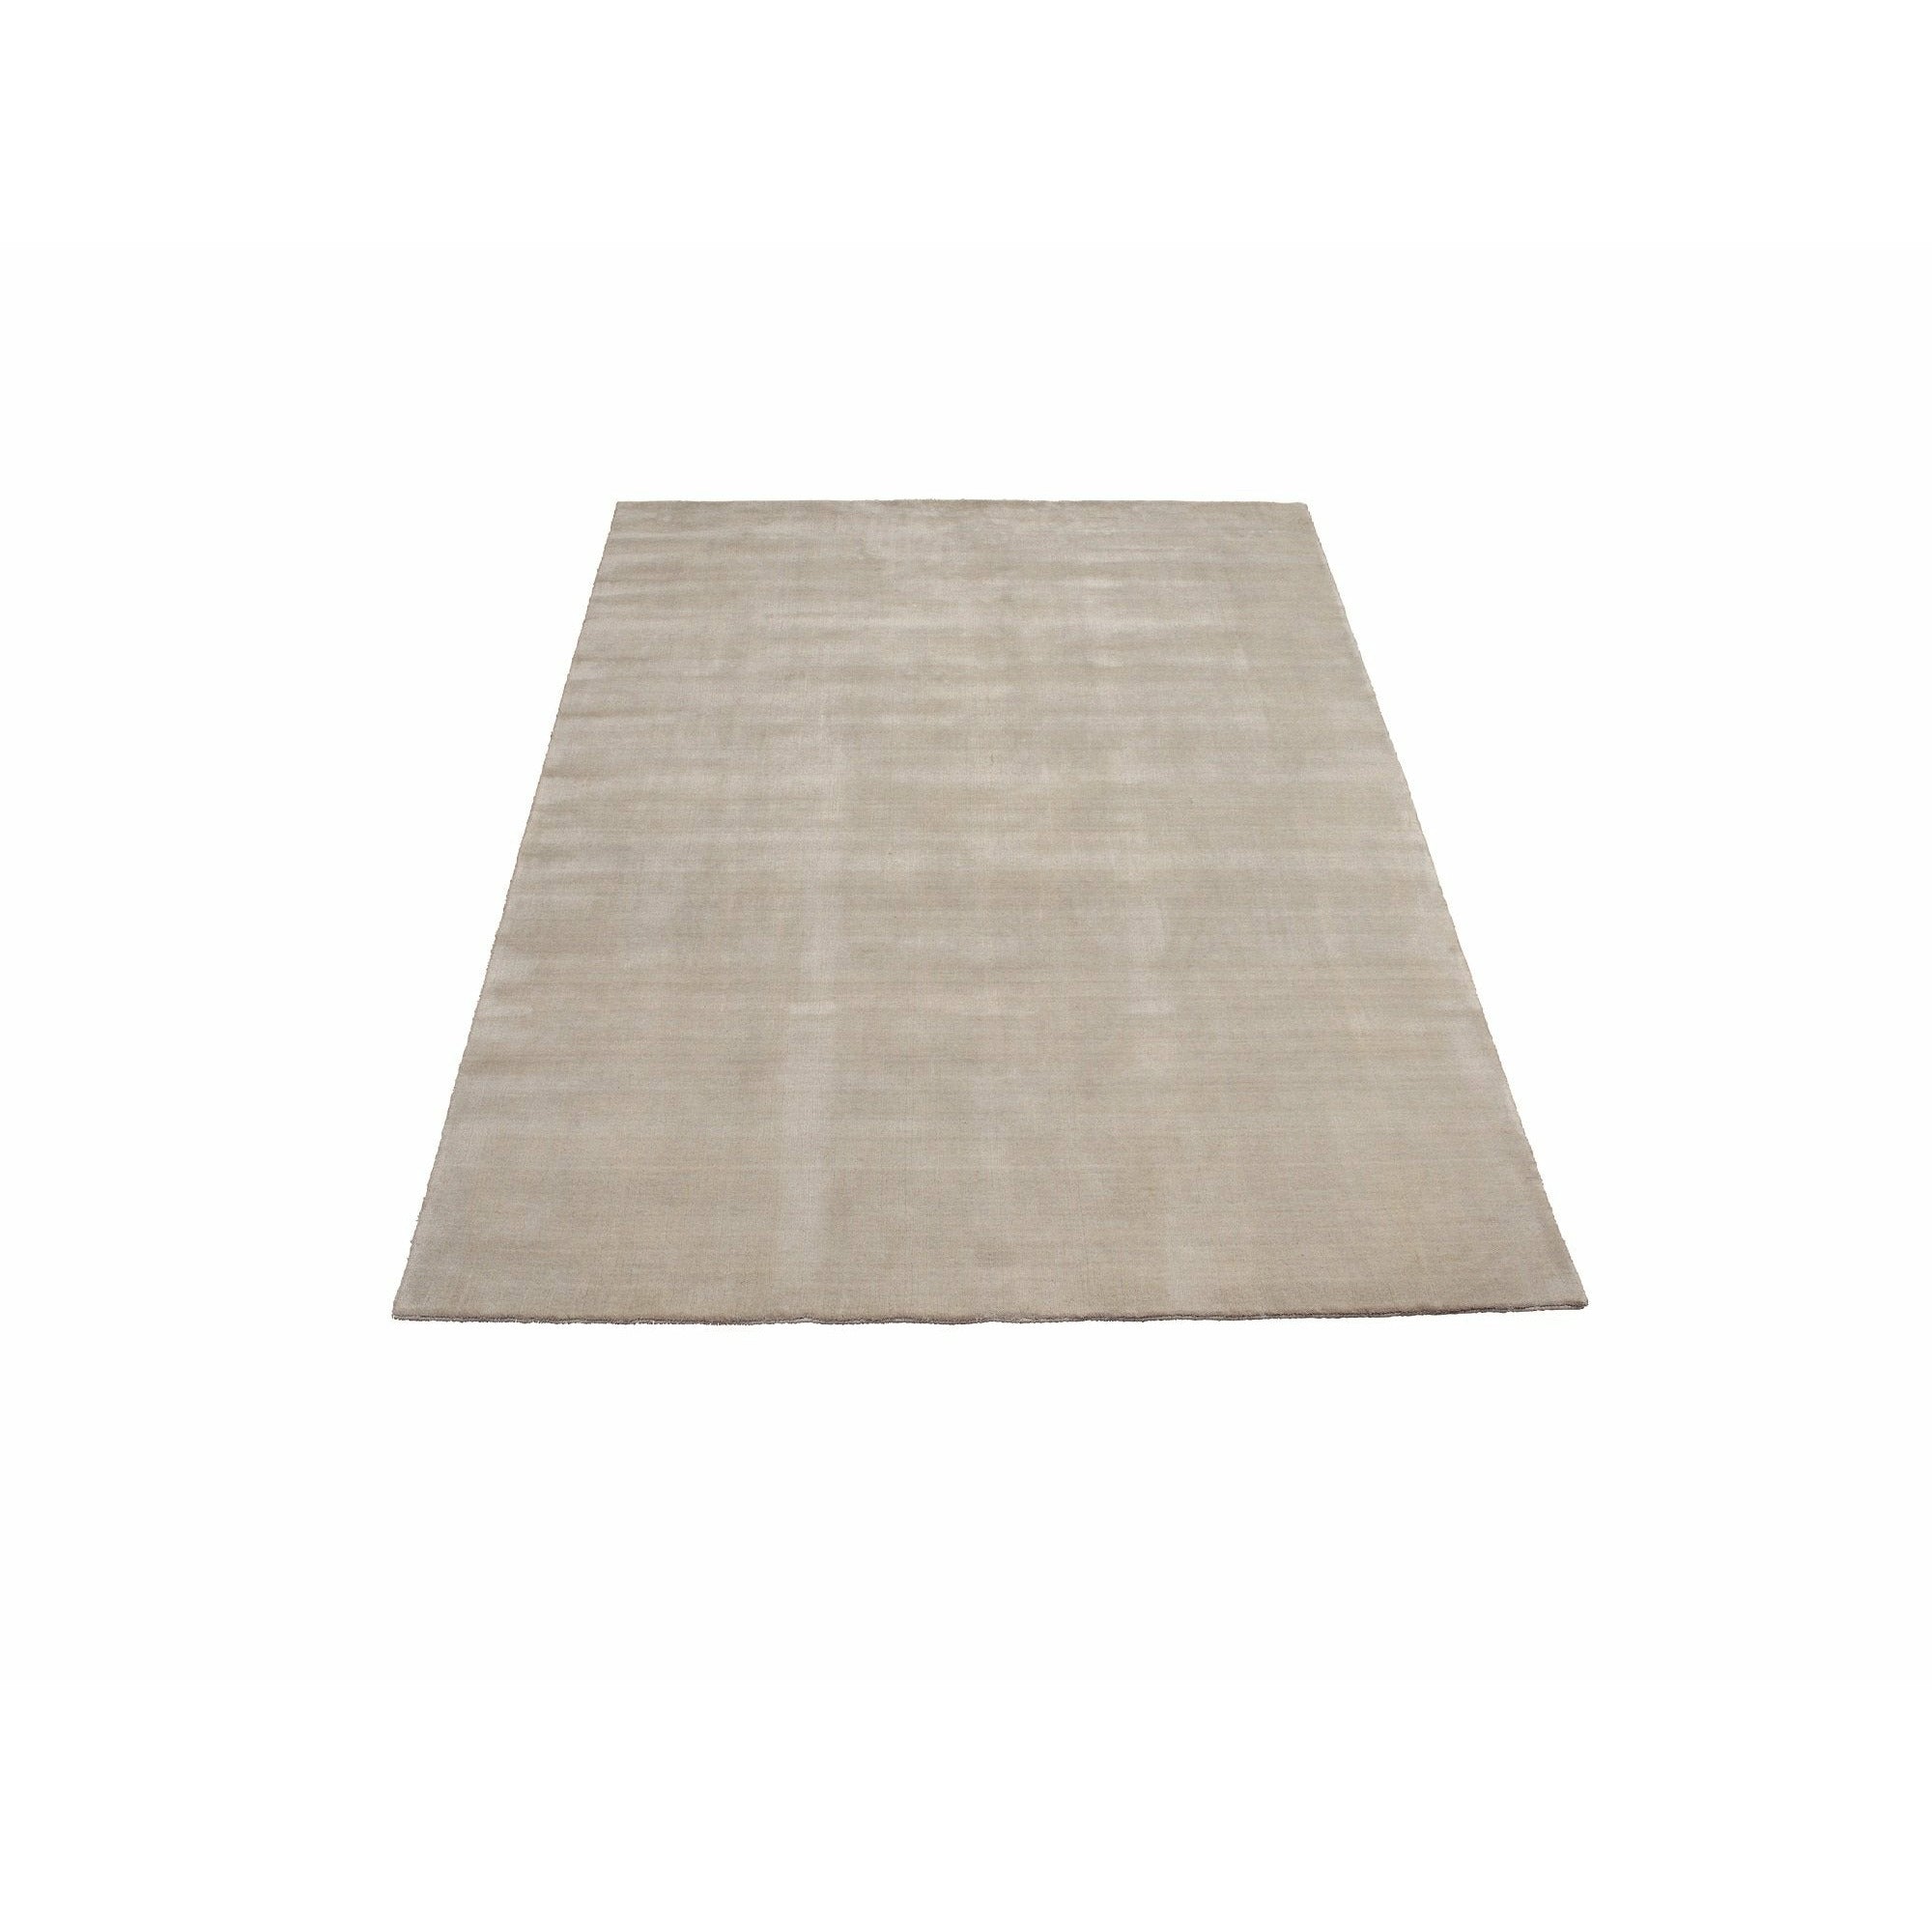 Massimo Earth bambus koberec měkká šedá, 300x400 cm